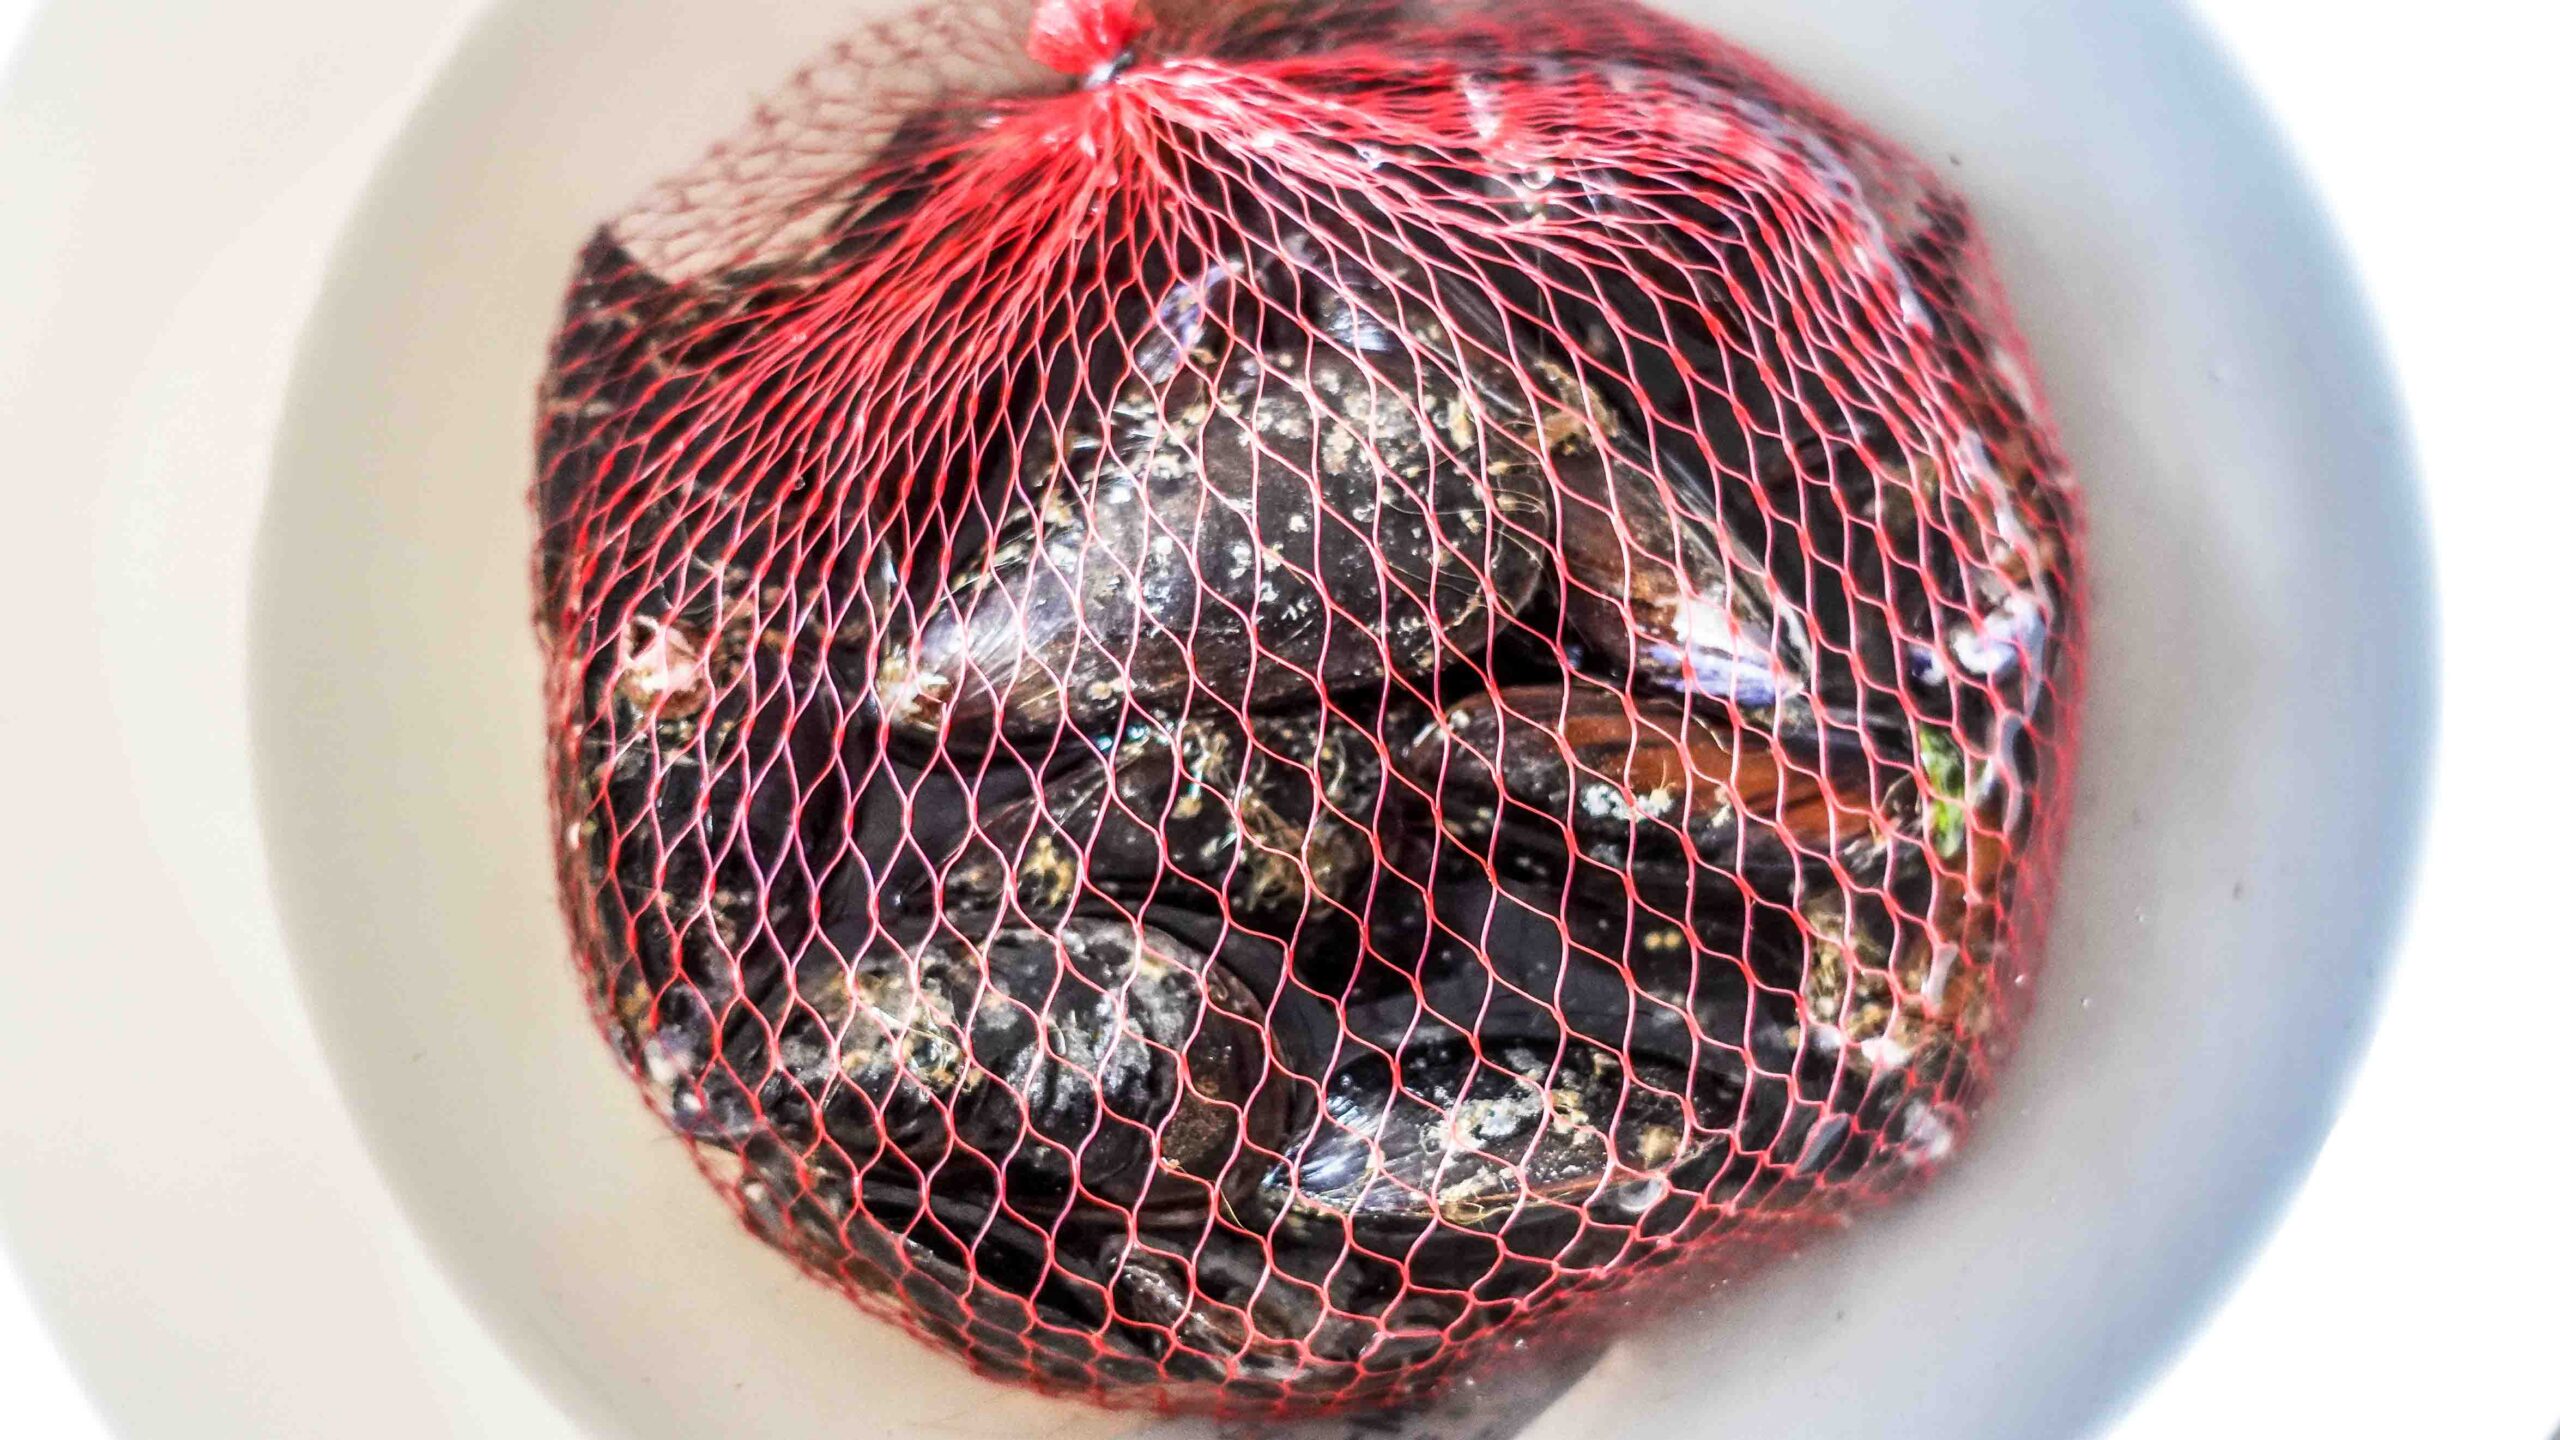 Fresh mussels in a bag